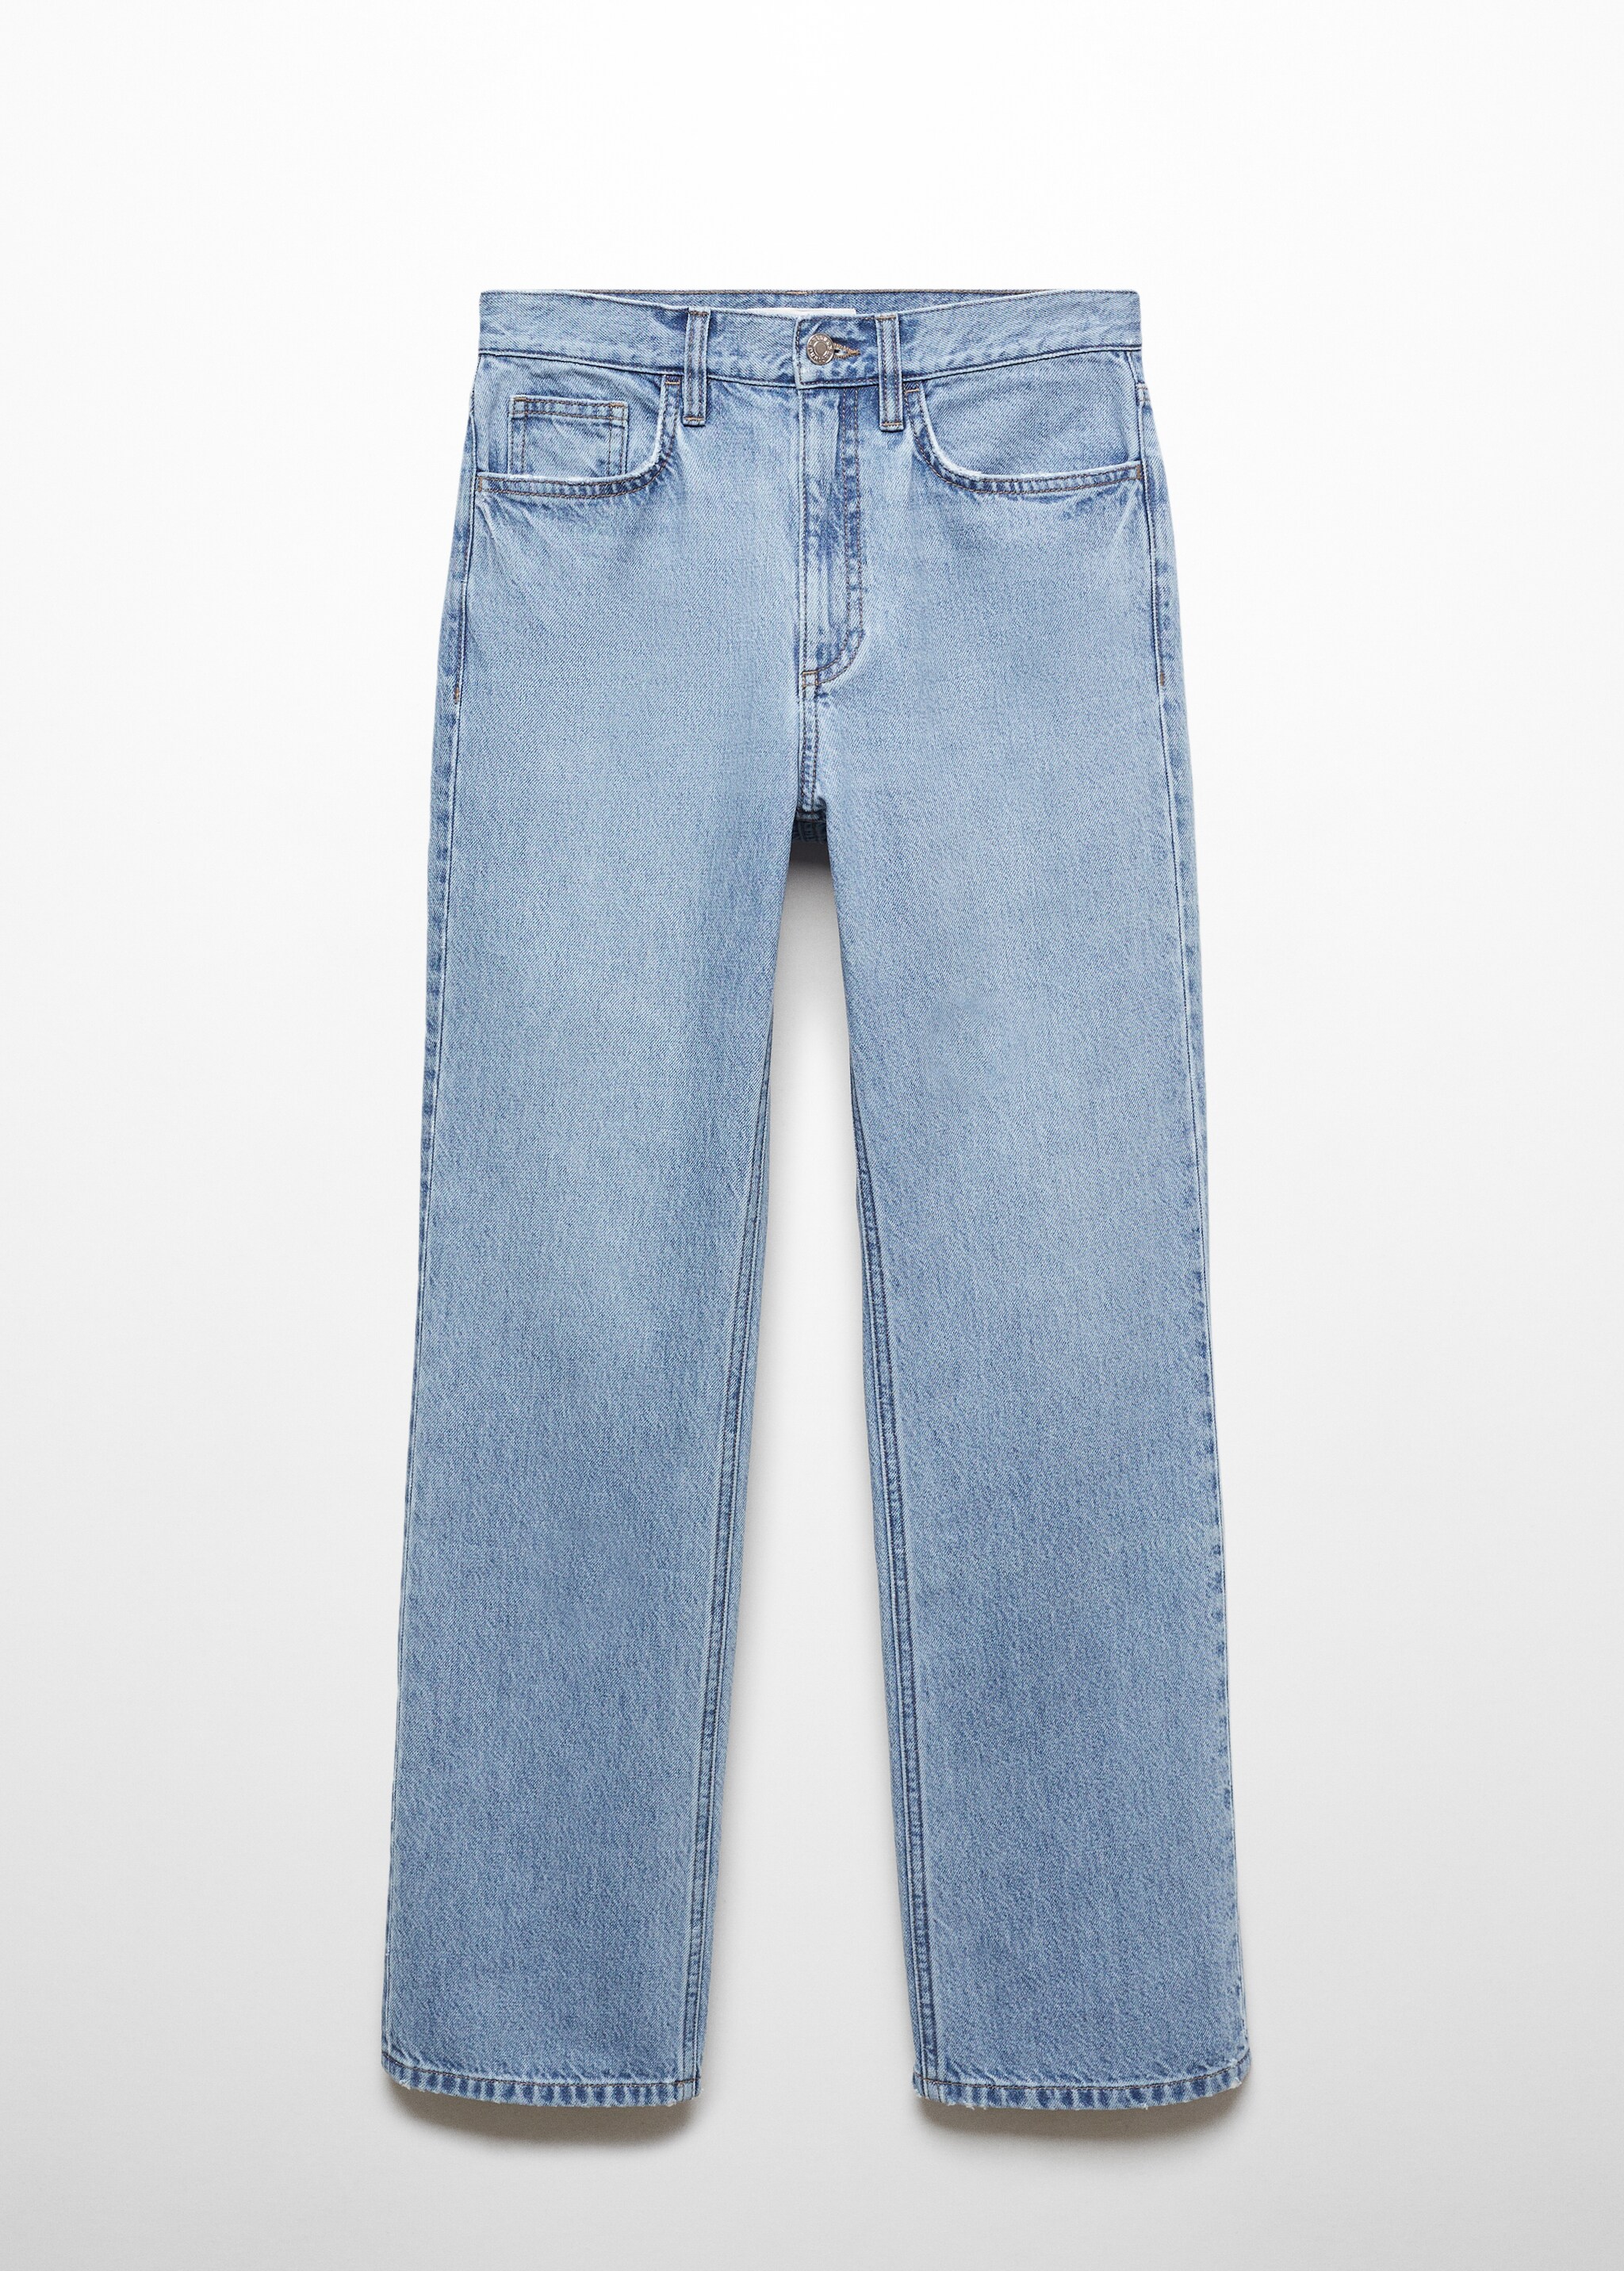 Rechte mid-rise jeans - Artikel zonder model